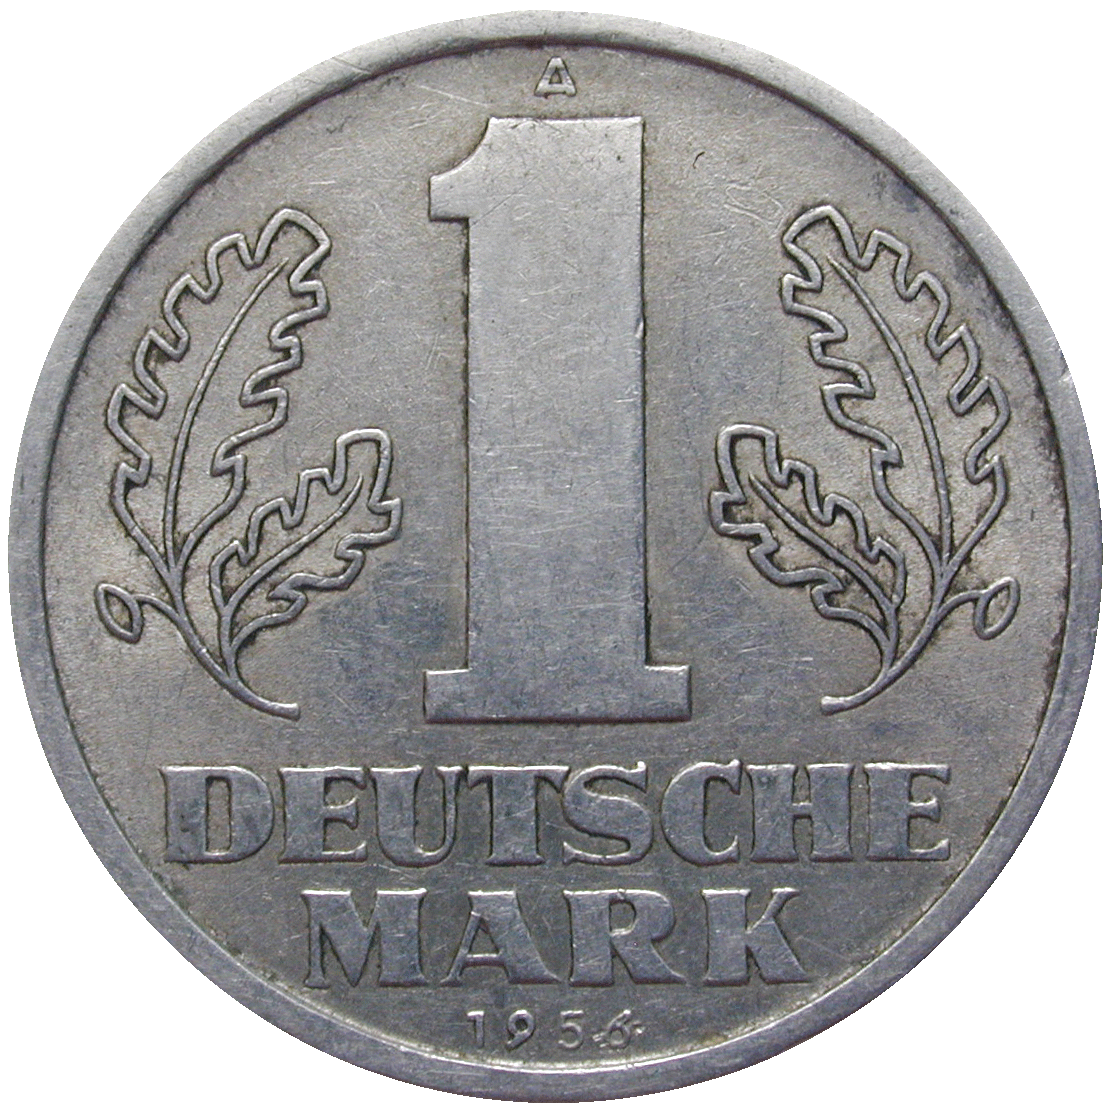 German Democratic Republic, 1 Deutsche Mark 1956 (reverse)